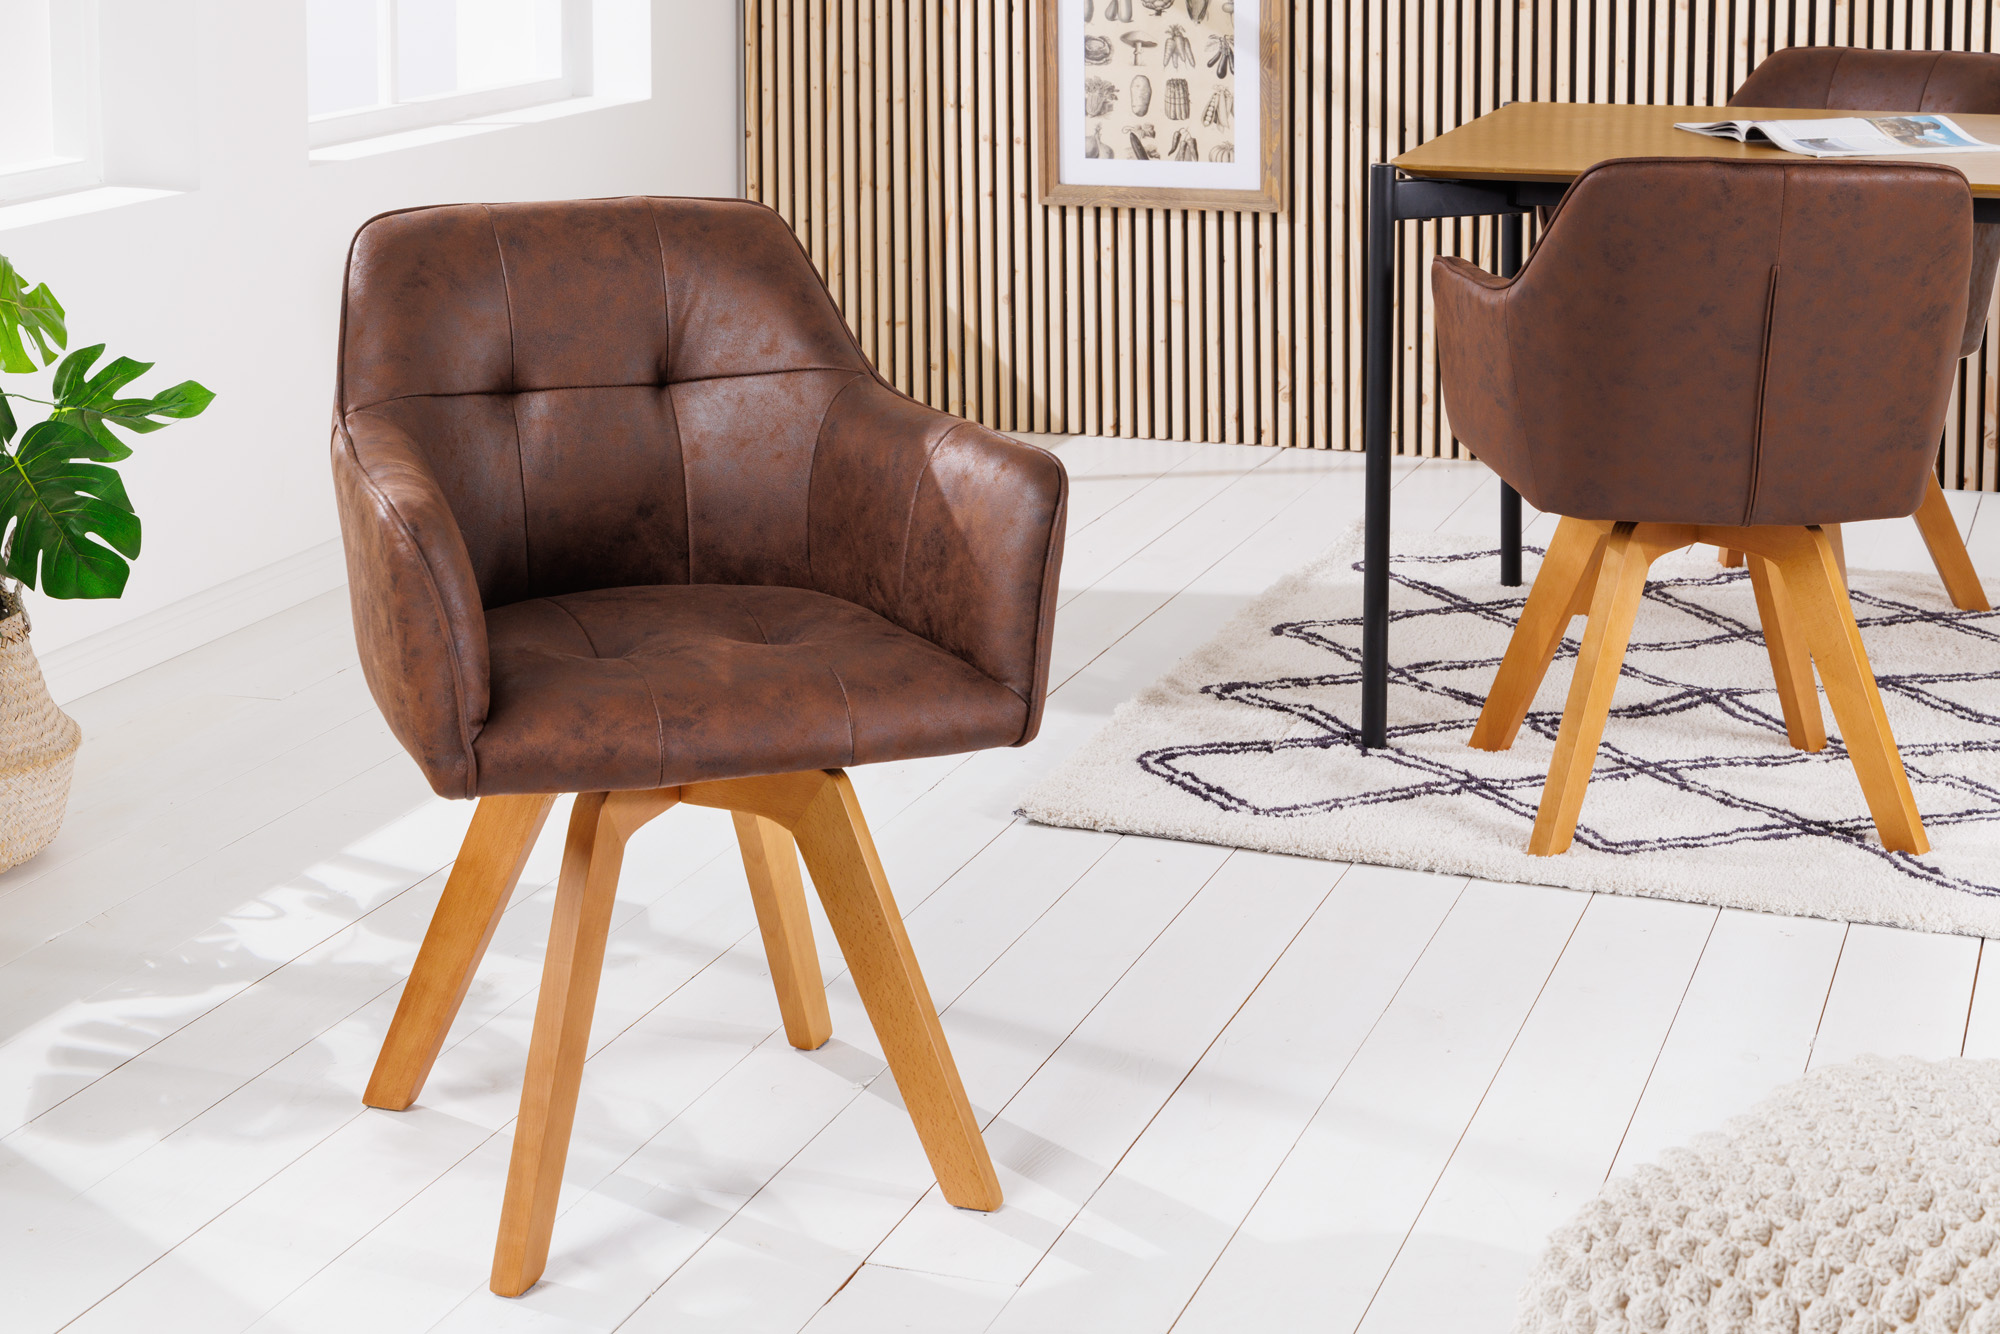 LuxD 26743 Dizajnová otočná stolička Galileo antik hnedá